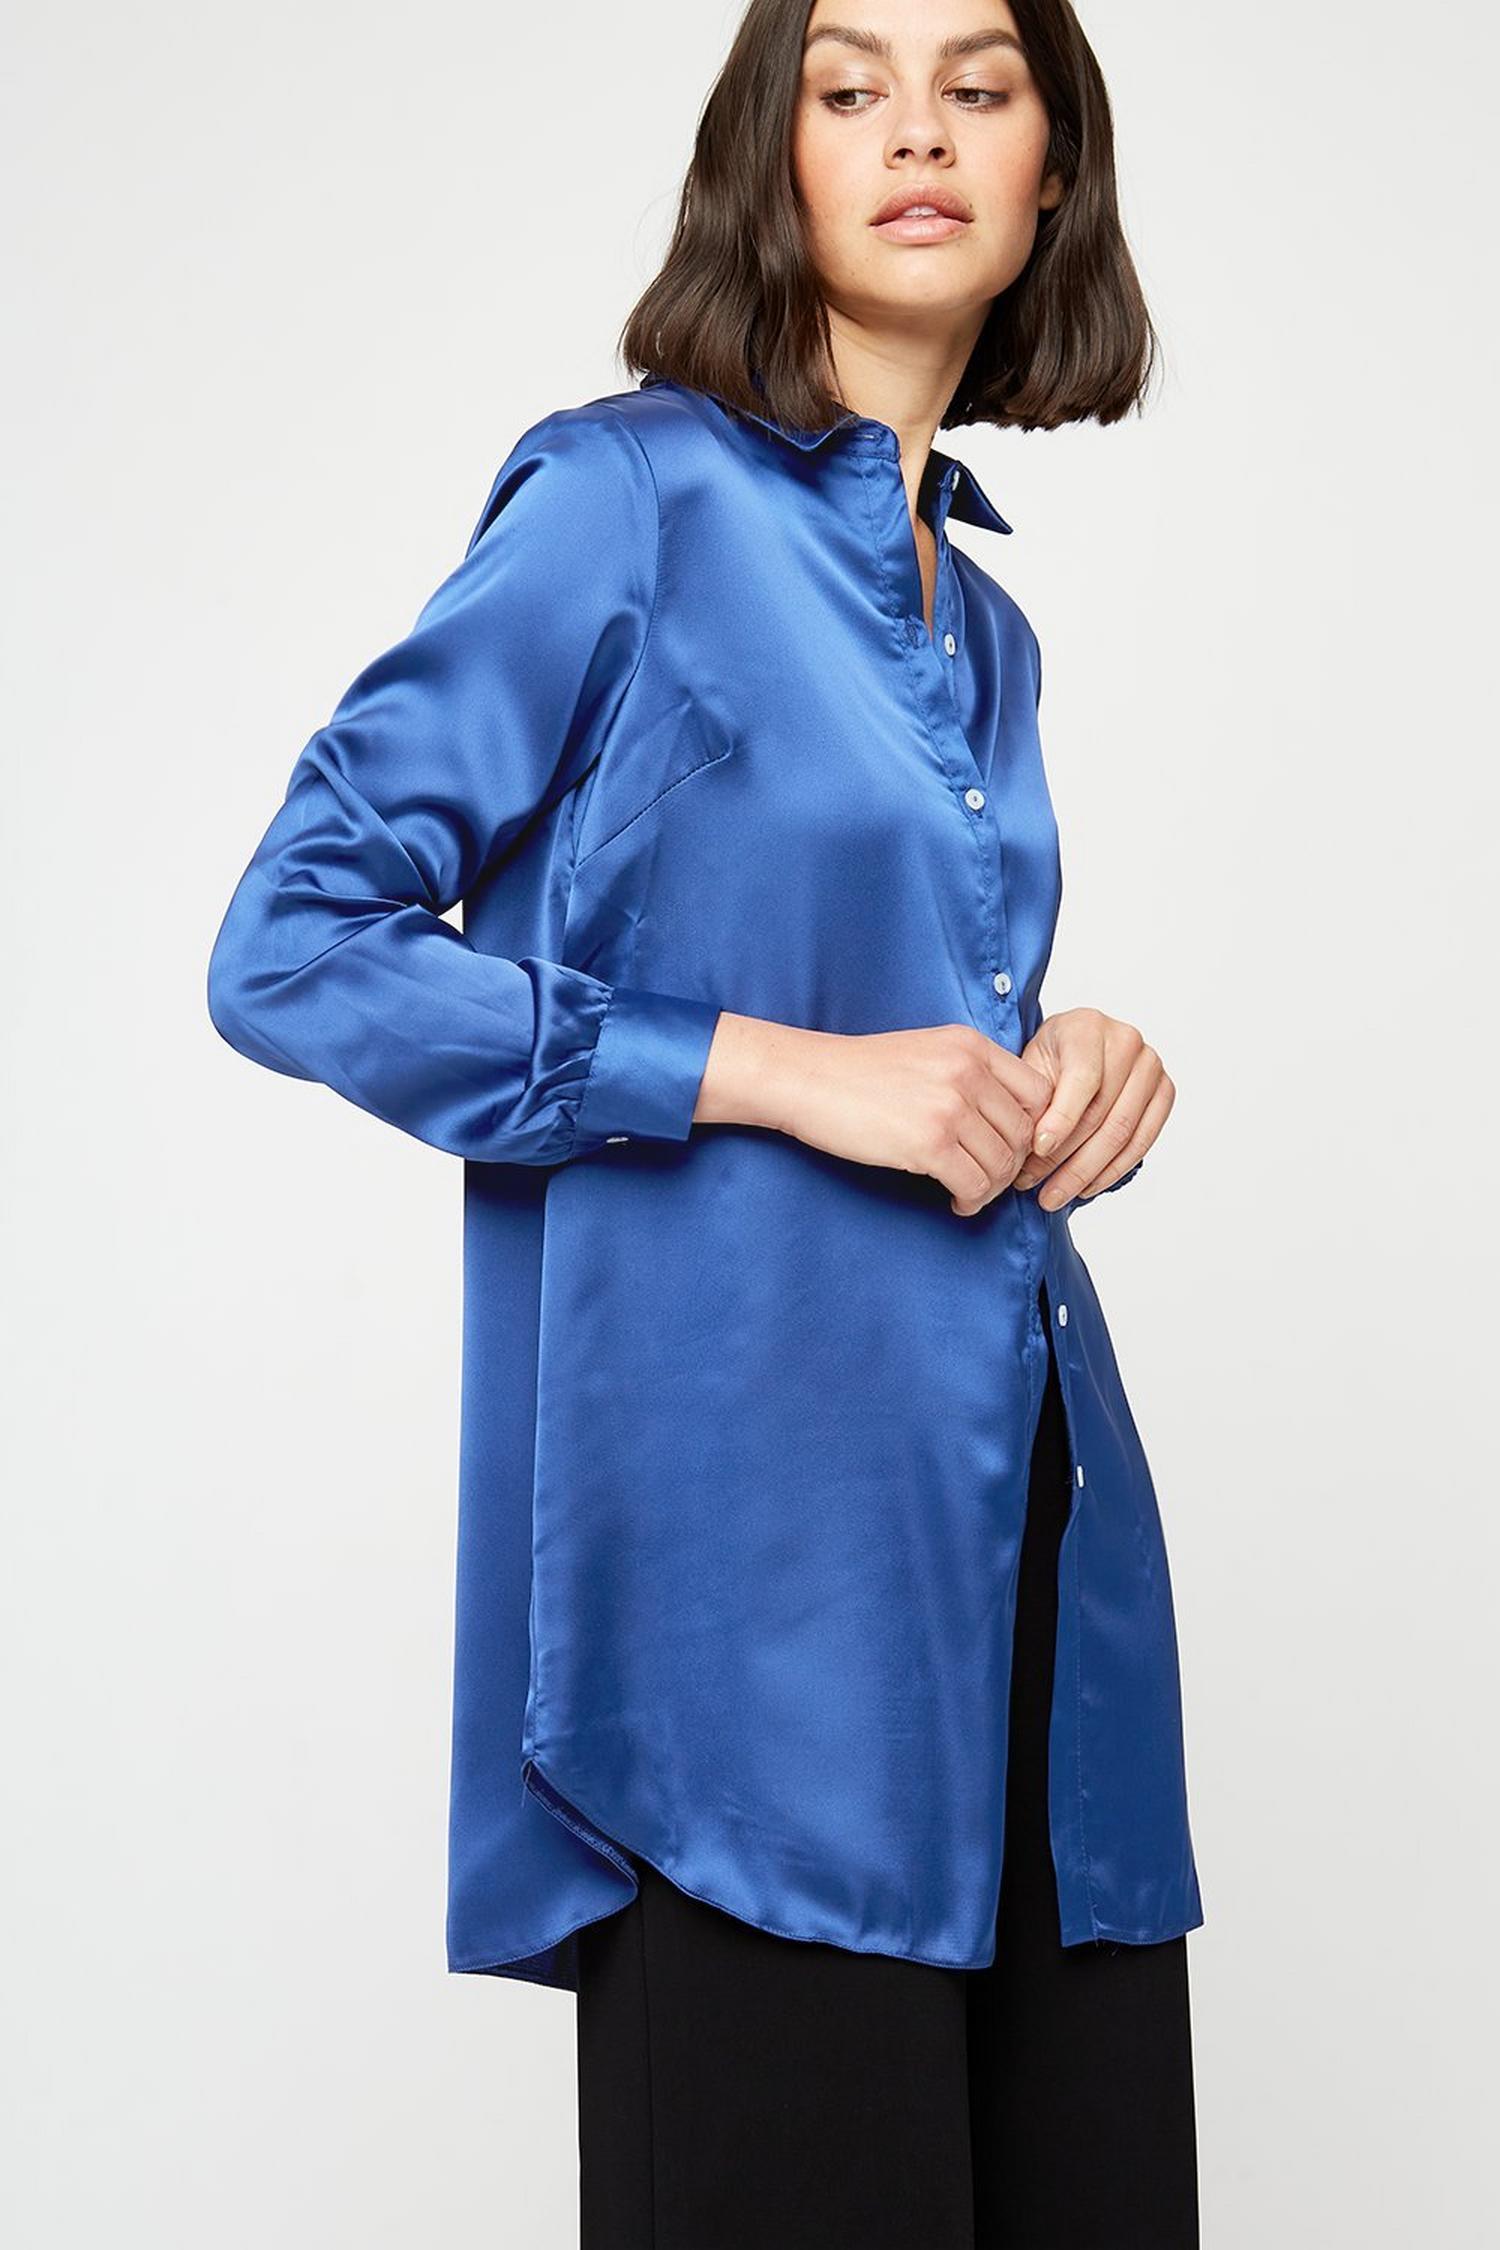 Satin Blue Long Line Shirt | Dorothy Perkins UK